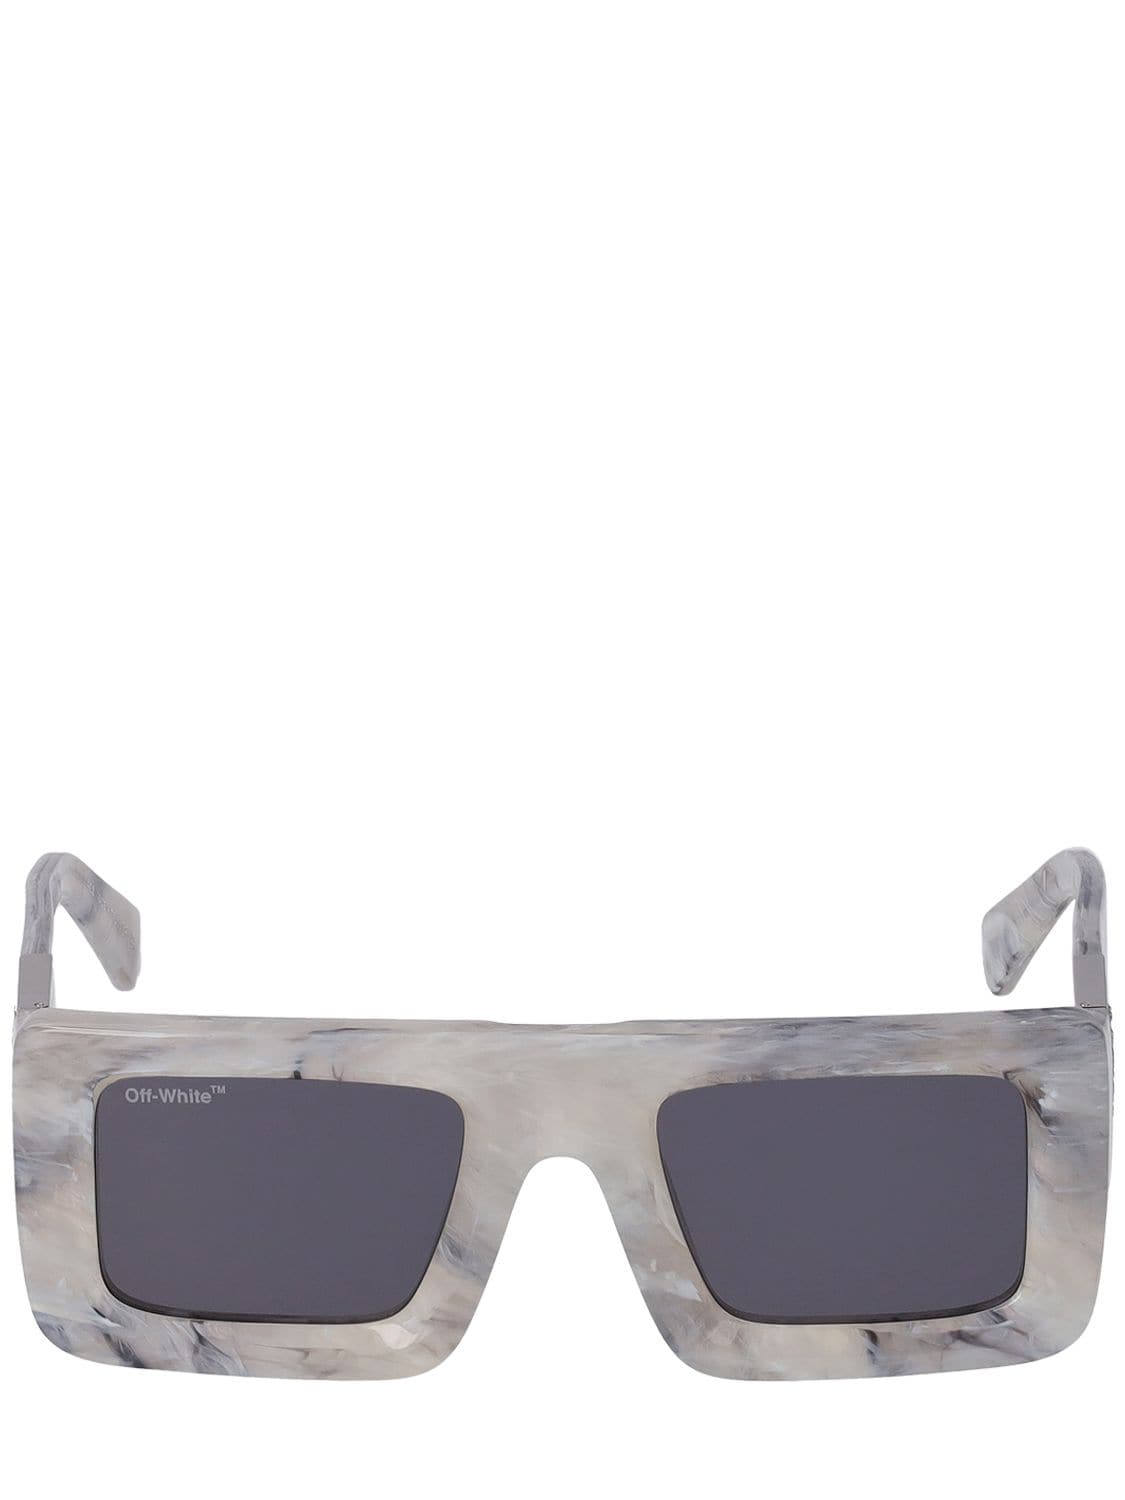 Off-White Men's Virgil Acetate Square Sunglasses, Marble, Men's, Sunglasses Square Sunglasses